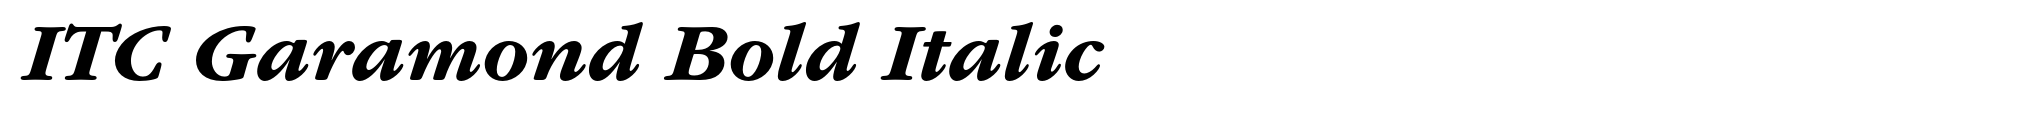 ITC Garamond Bold Italic image